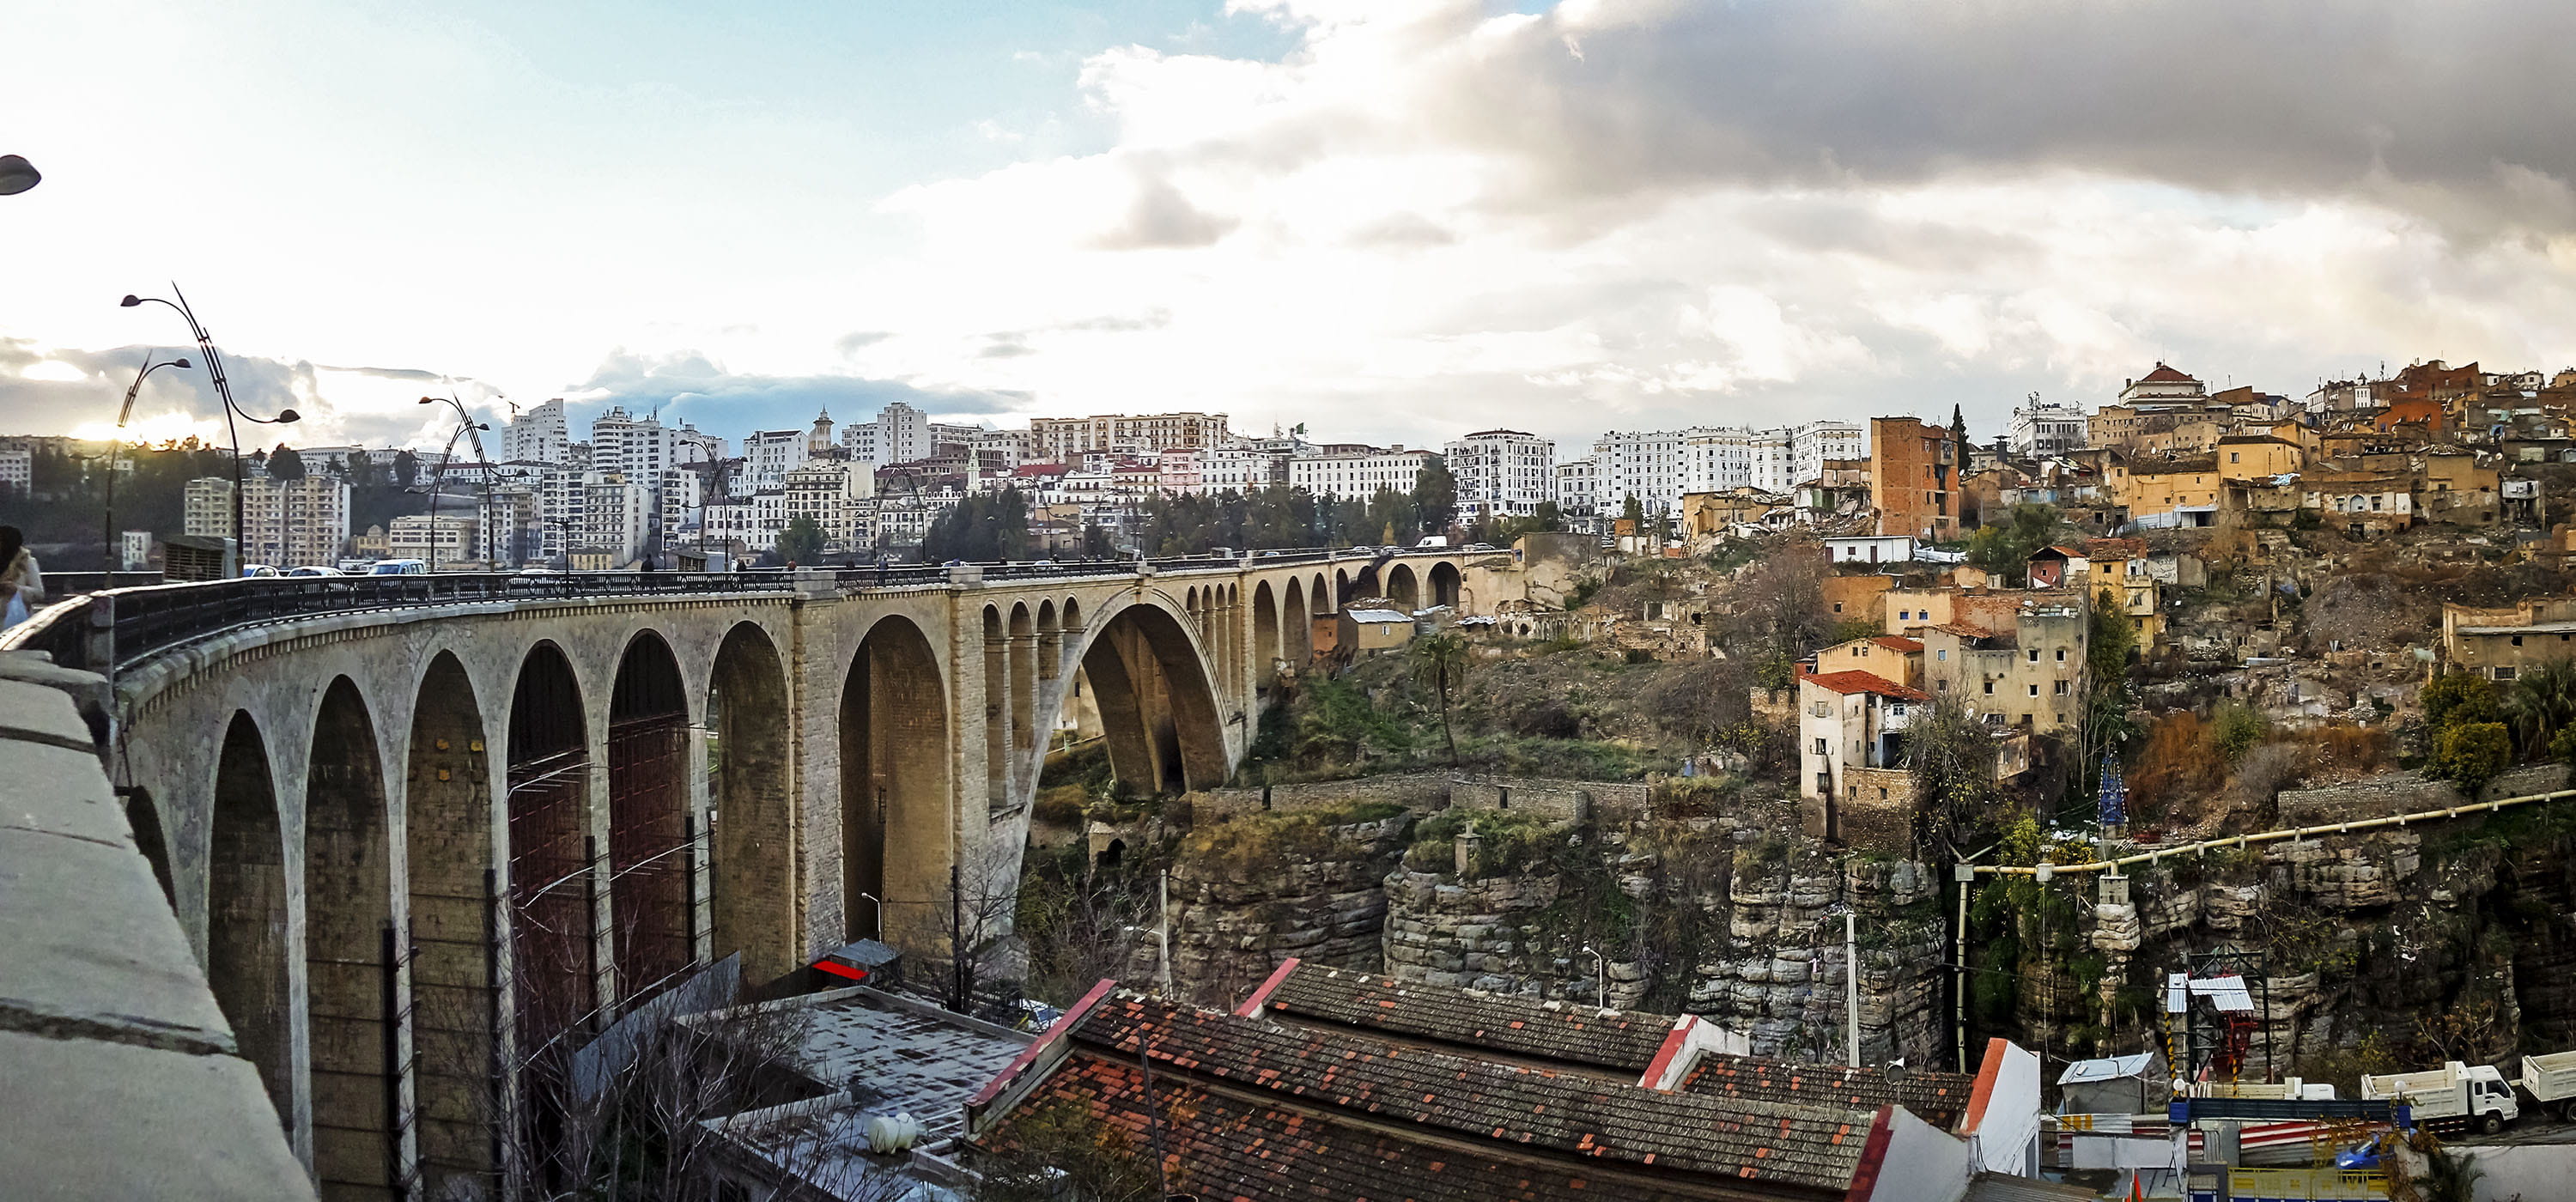 Ville de Constantine in Constantine, Algeria, Algiers, arches